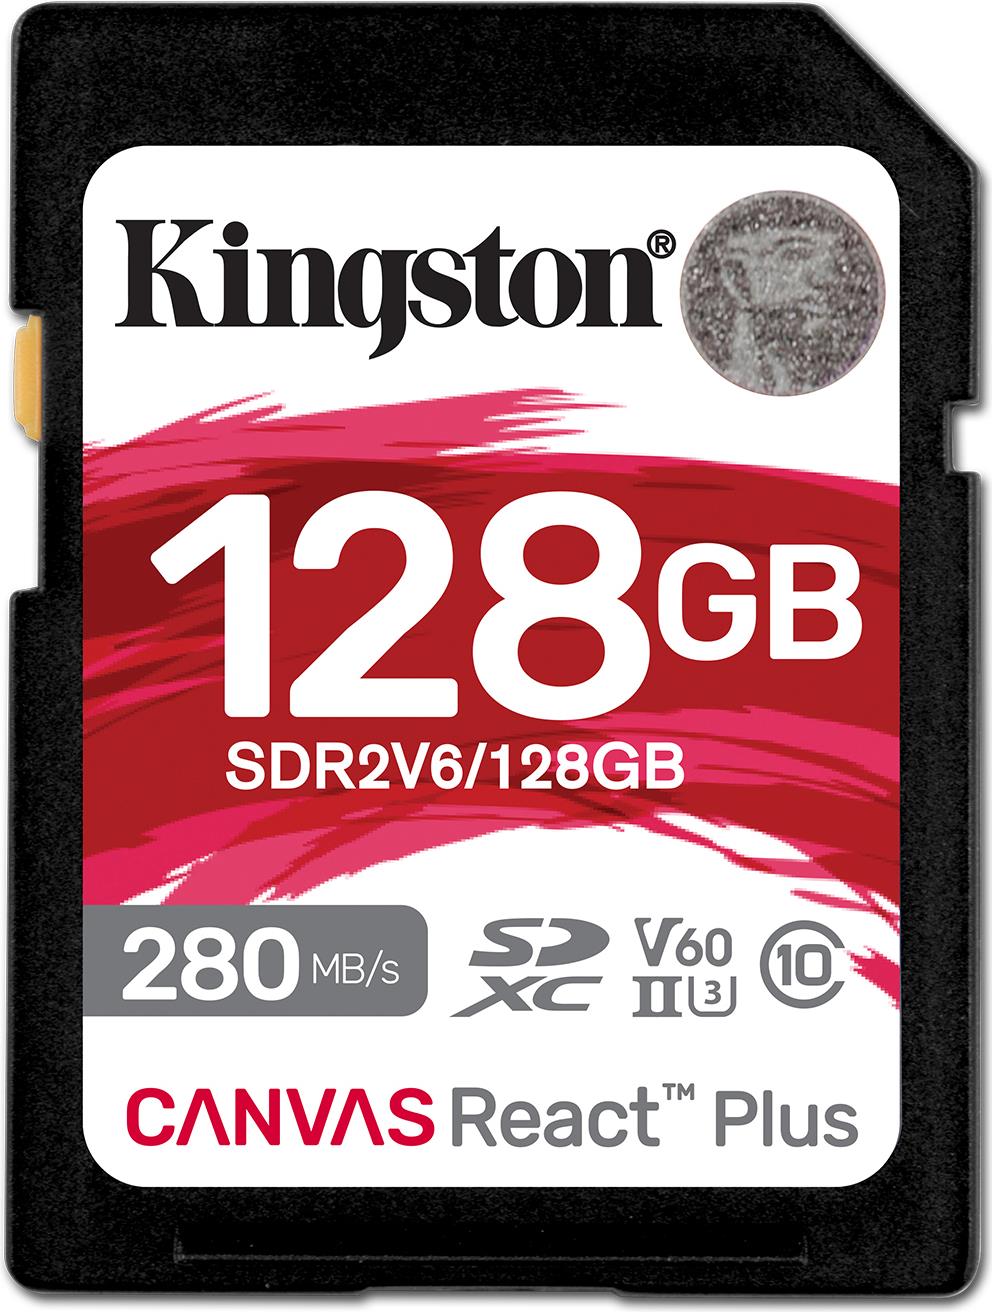 Kingston Technology 128GB Canvas React Plus SDXC UHS-II 280R/100W U3 V60 for Full HD/4K (SDR2V6/128GB)